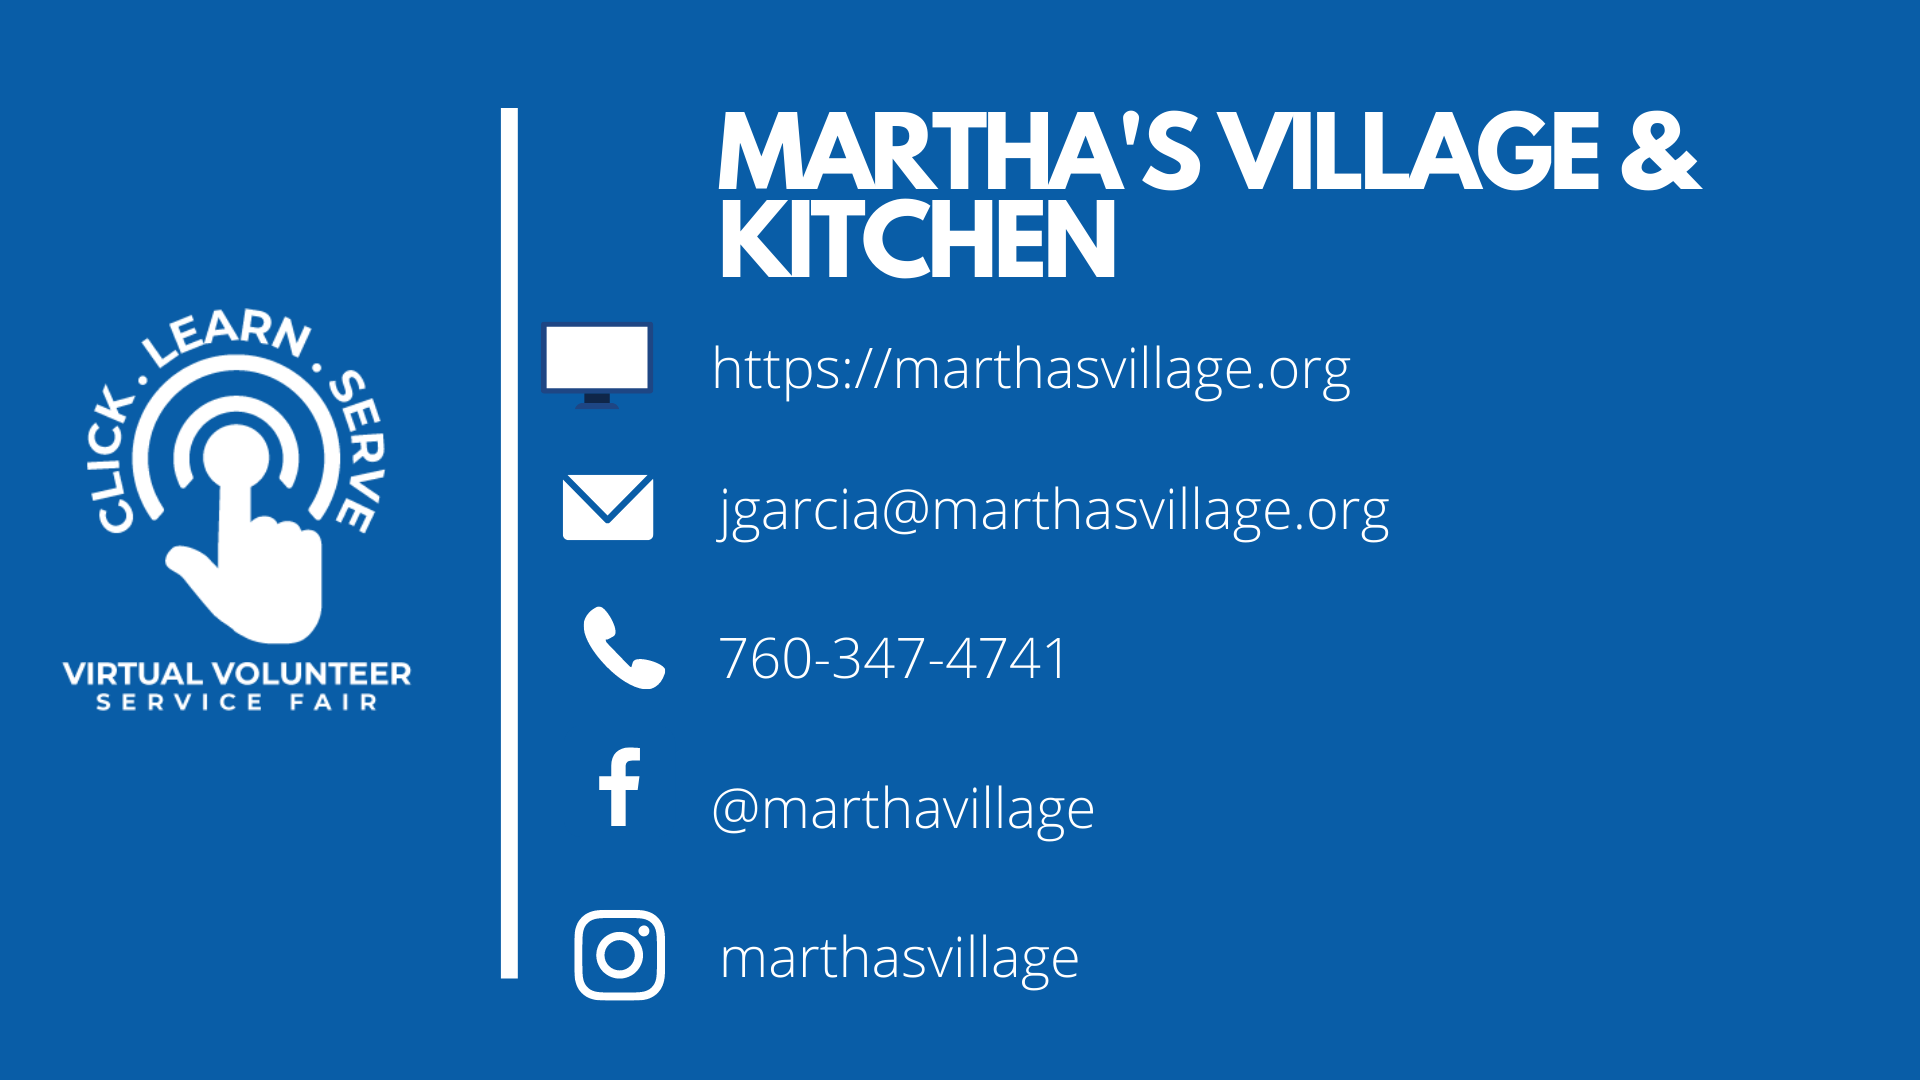 Martha's Village & Kitchen nonprofit video for Virtual Volunteer Fair.